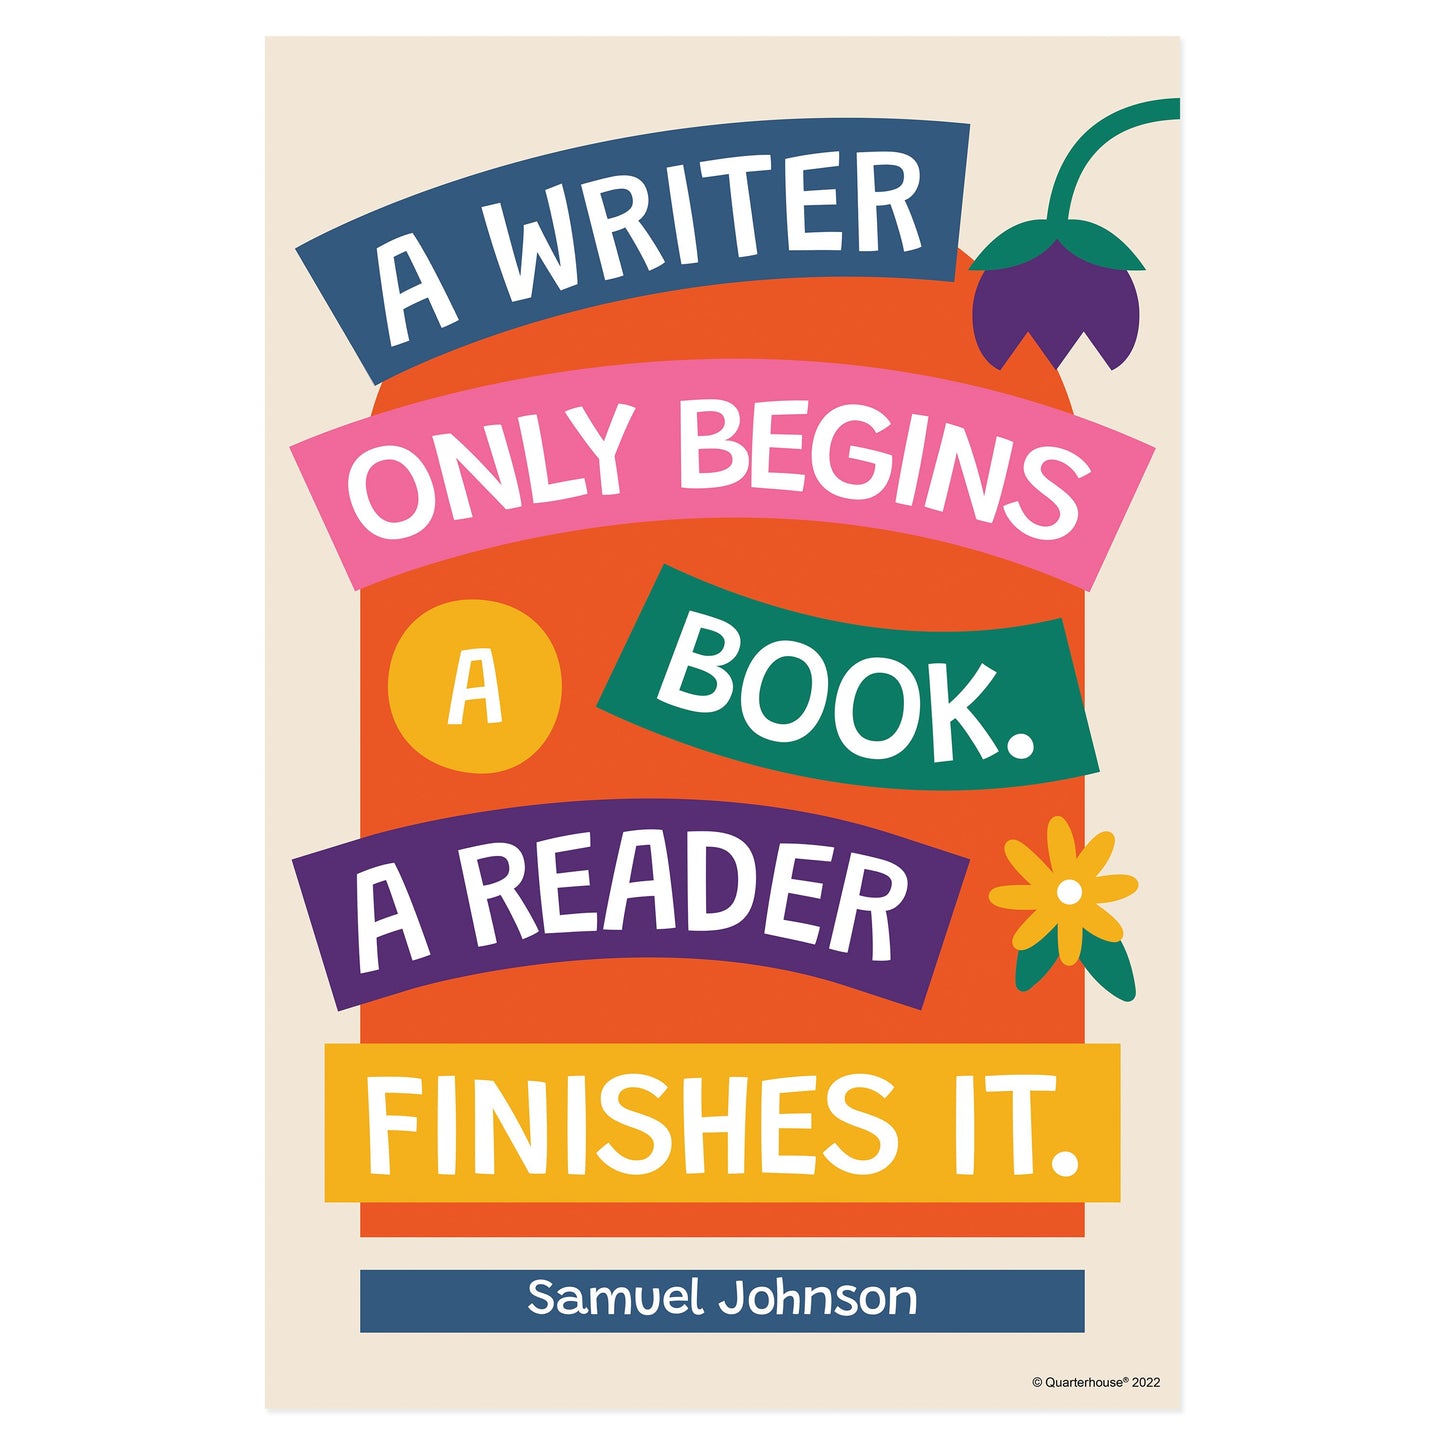 Quarterhouse Reading is Fun Quotes - Samuel Johnson Poster, English-Language Arts Classroom Materials for Teachers